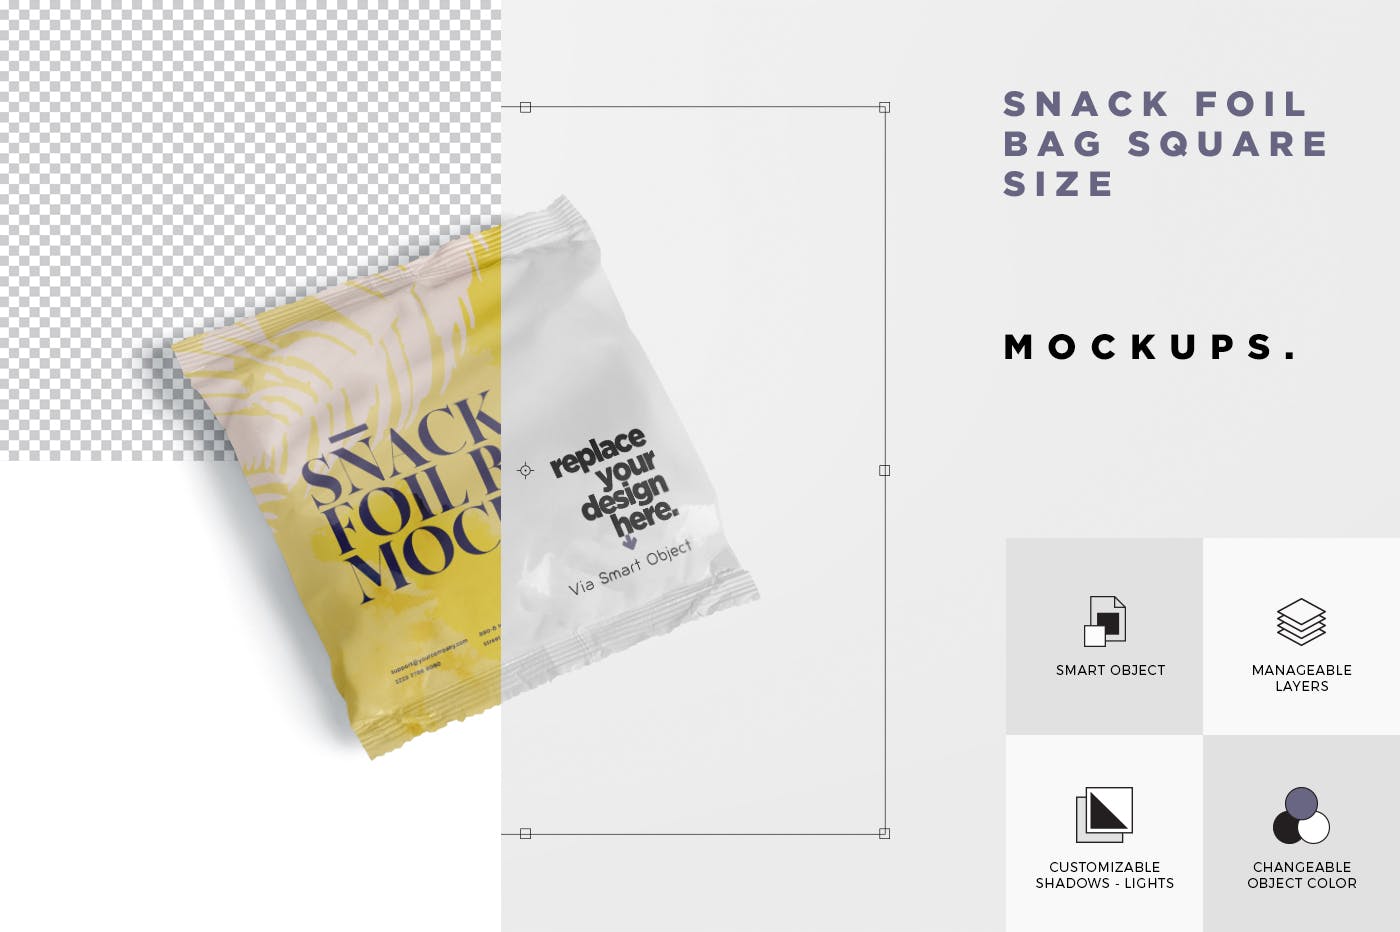 小吃零食铝箔包装袋设计图16设计网精选 Snack Foil Bag Mockup – Square Size – Small插图(6)